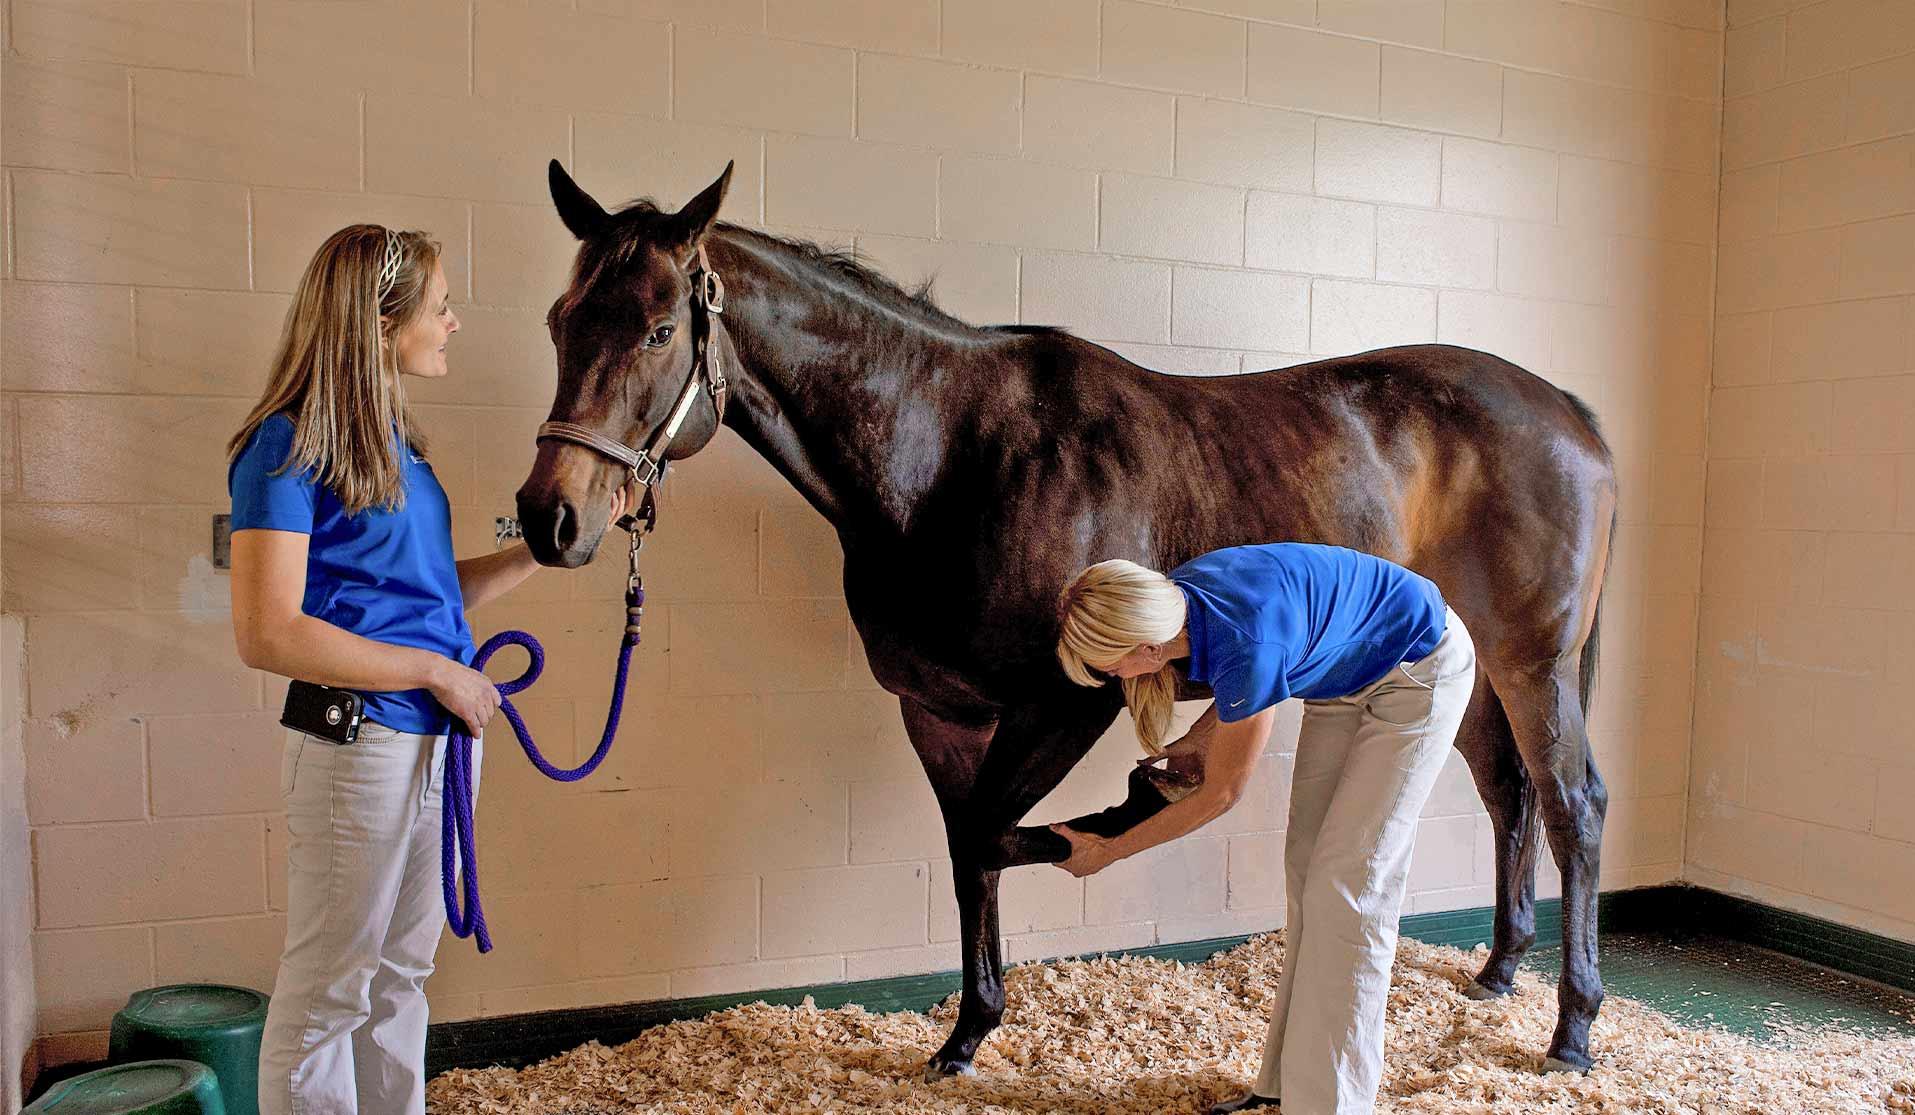 Two veterinarians examining a horse's hoof